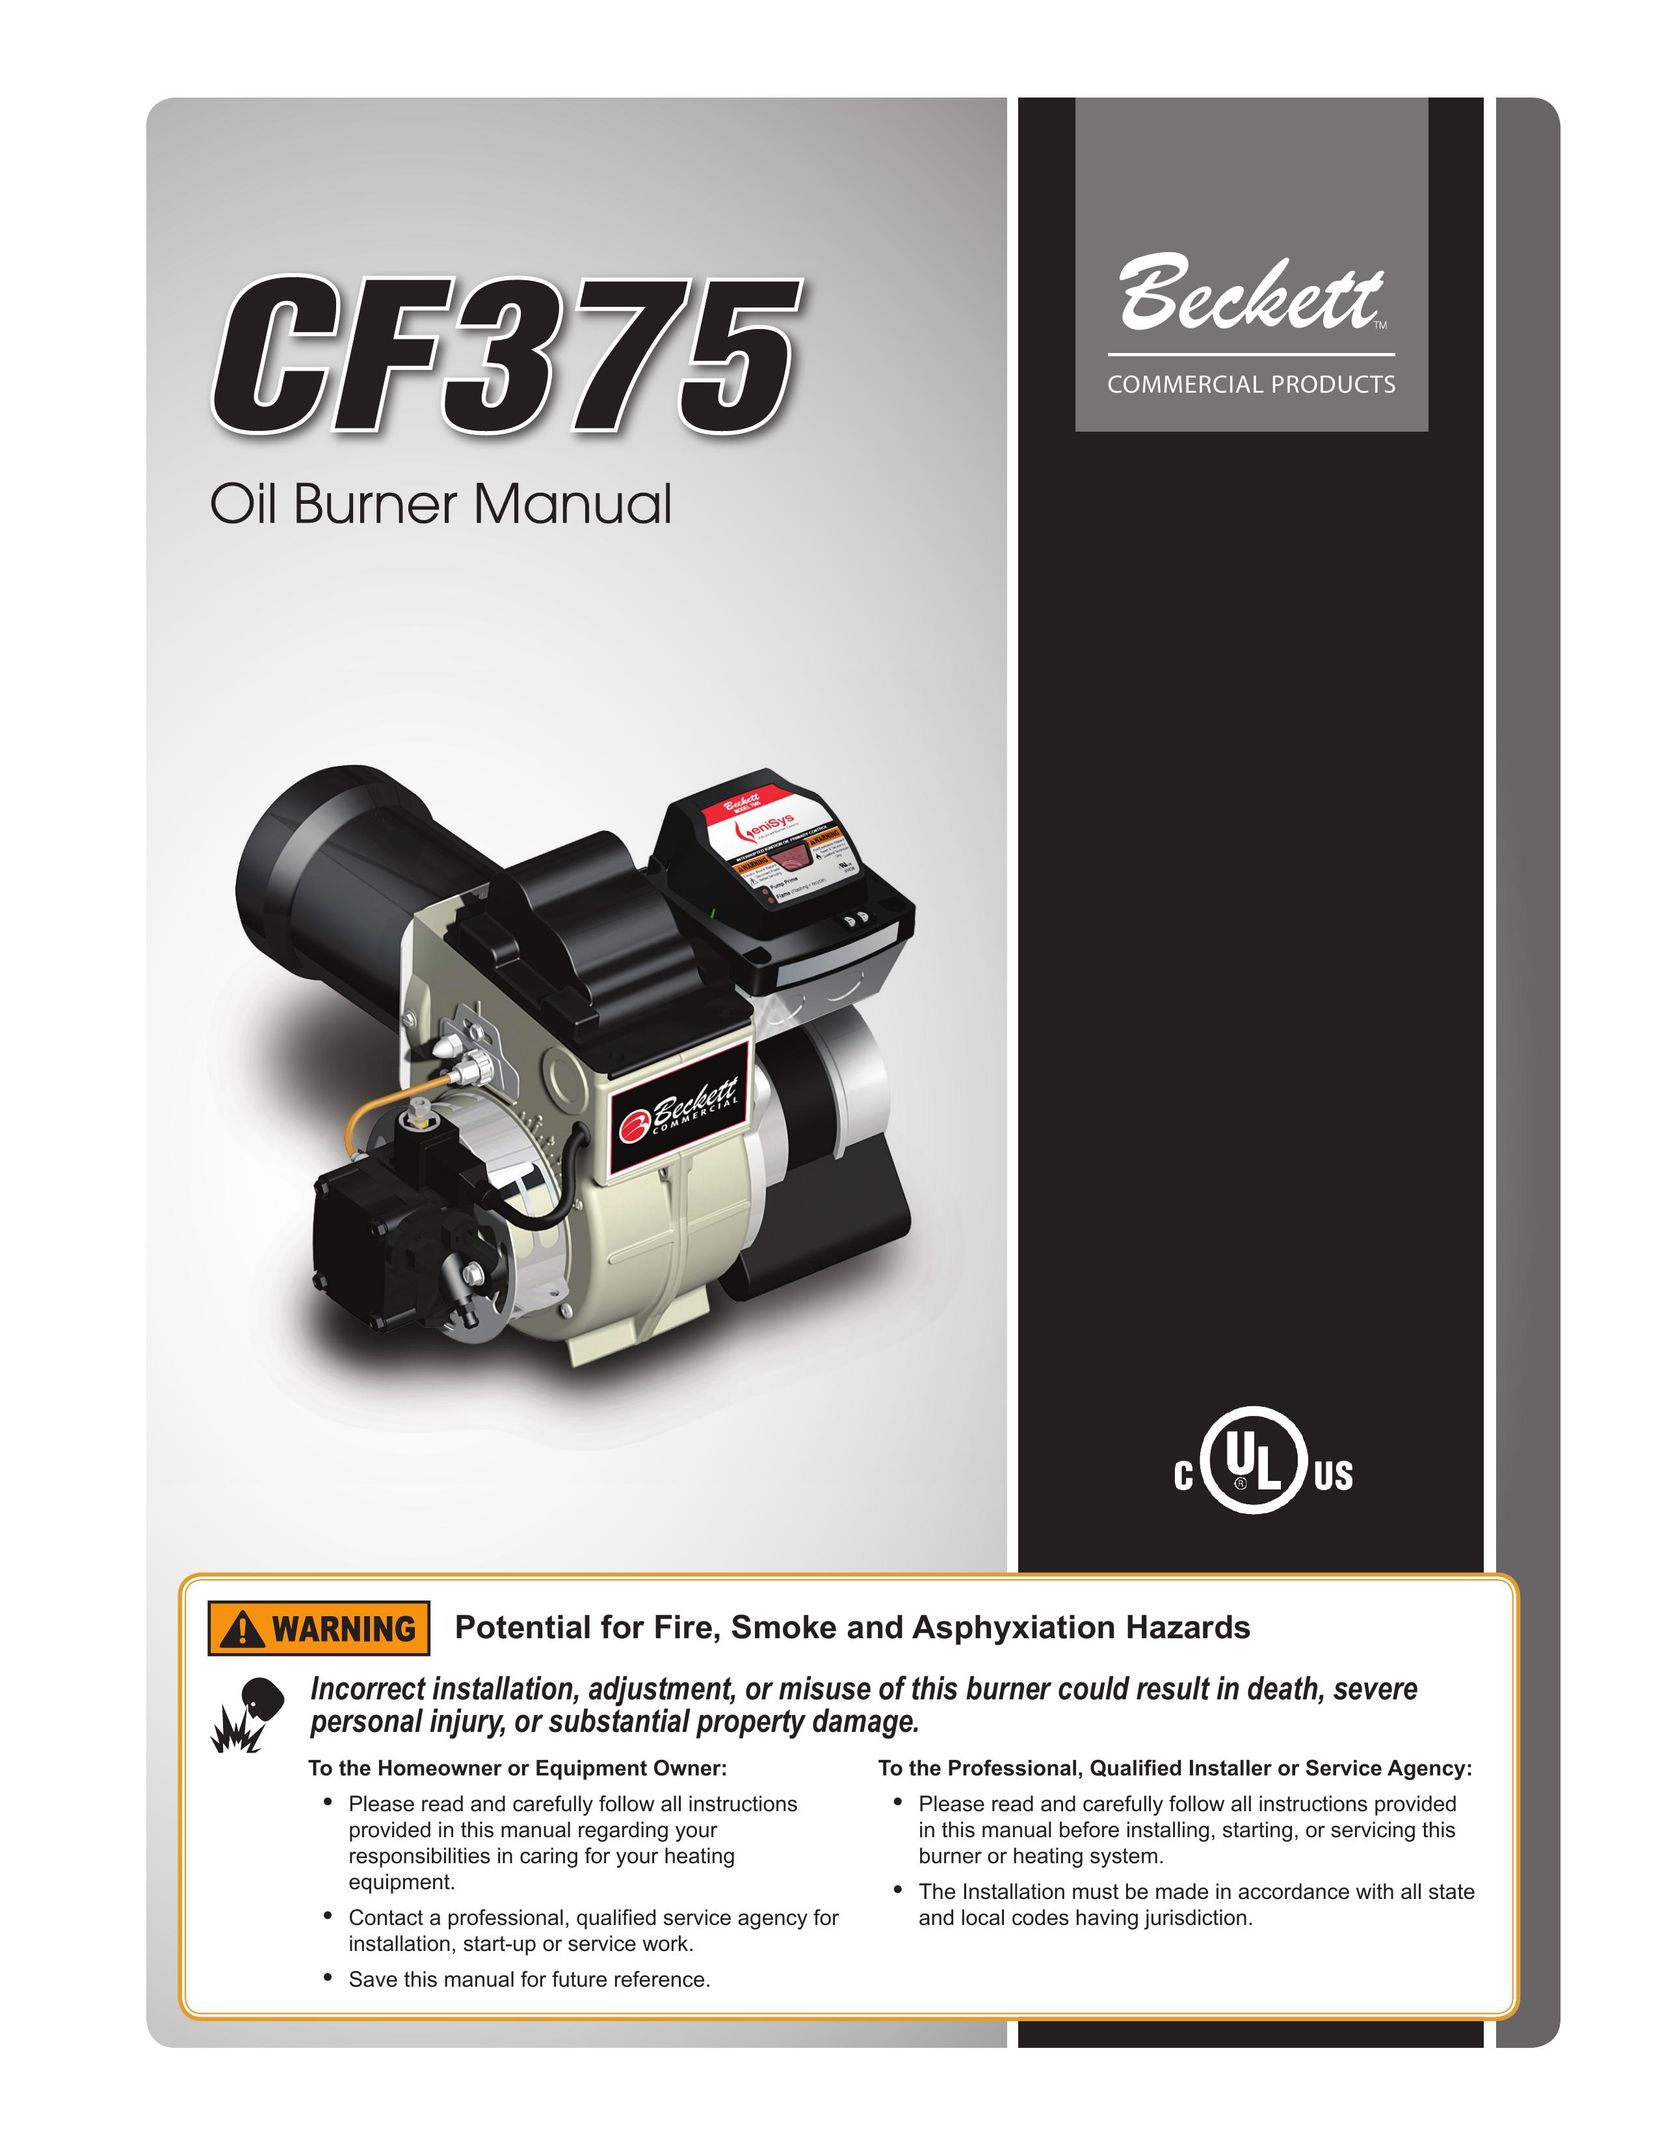 Beckett CF375 Burner User Manual